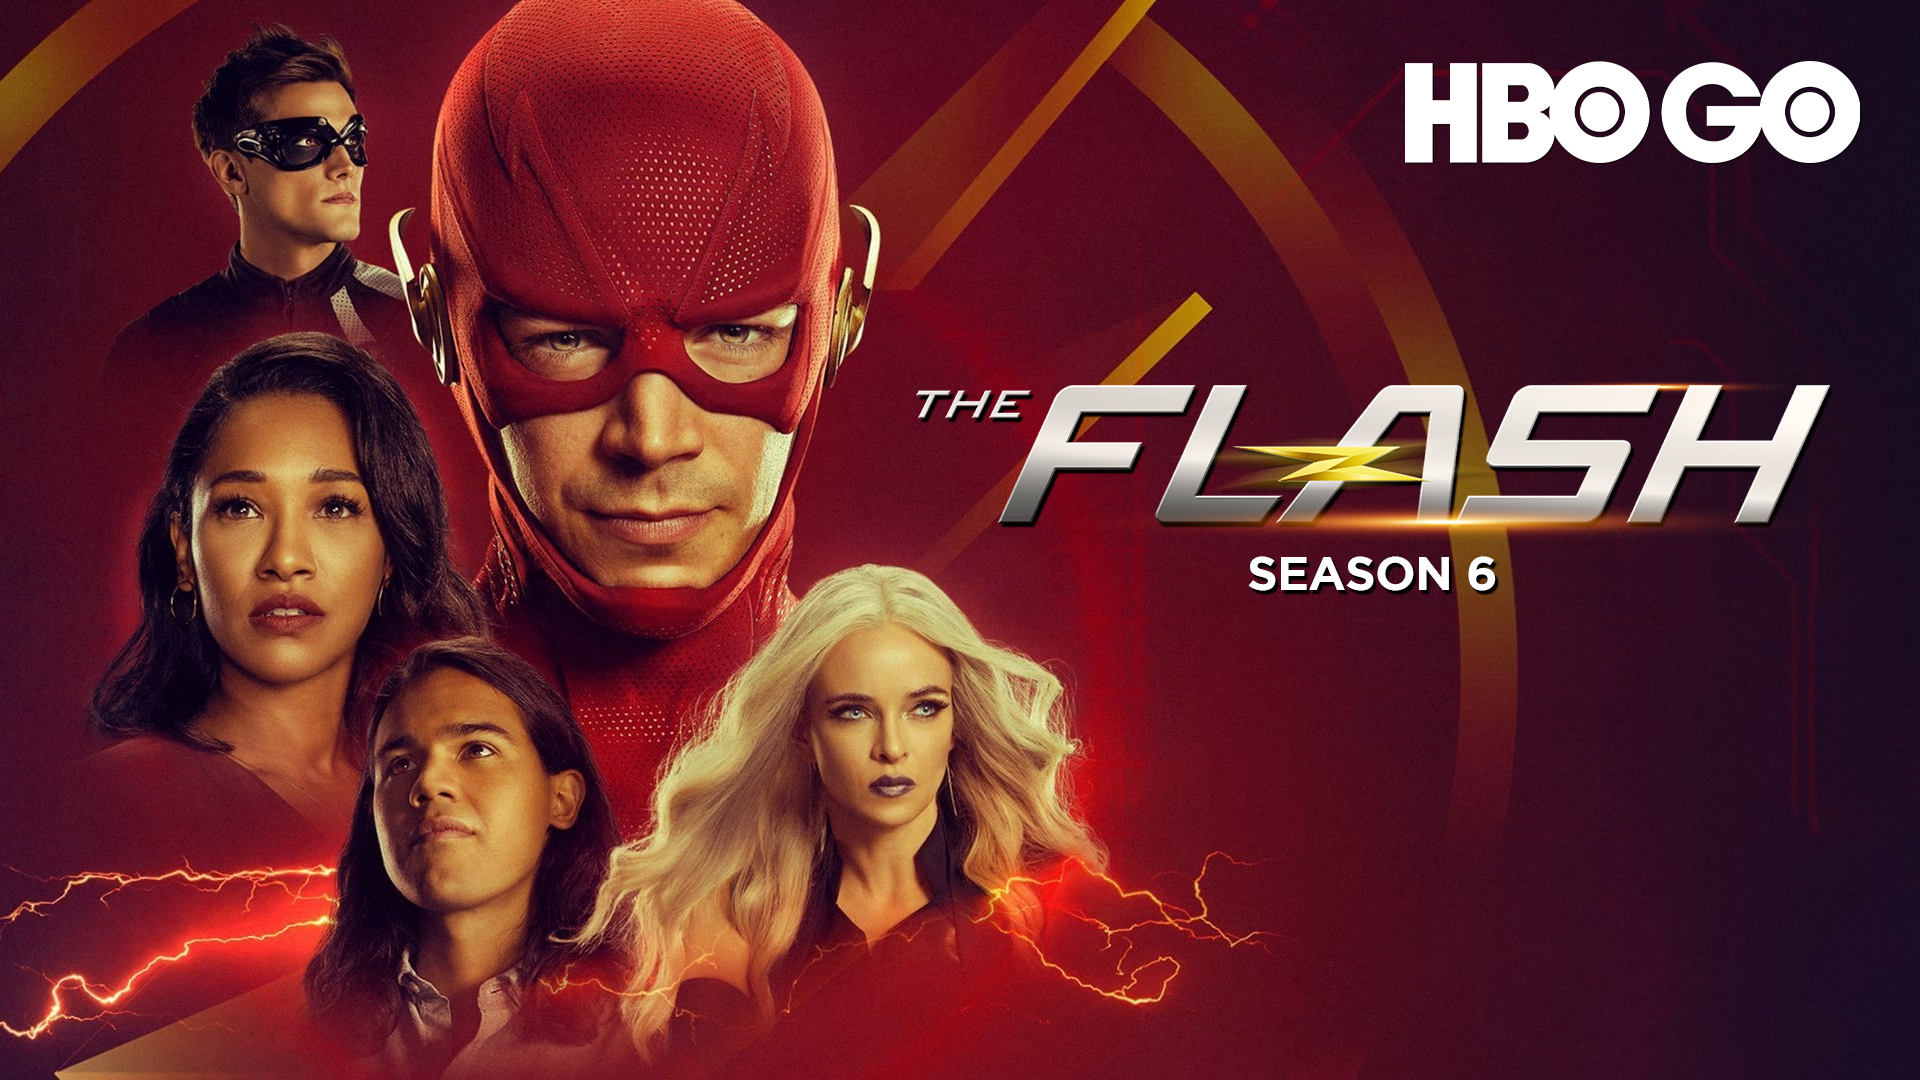 The Flash (Season 6) / The Flash (Season 6) (2019)